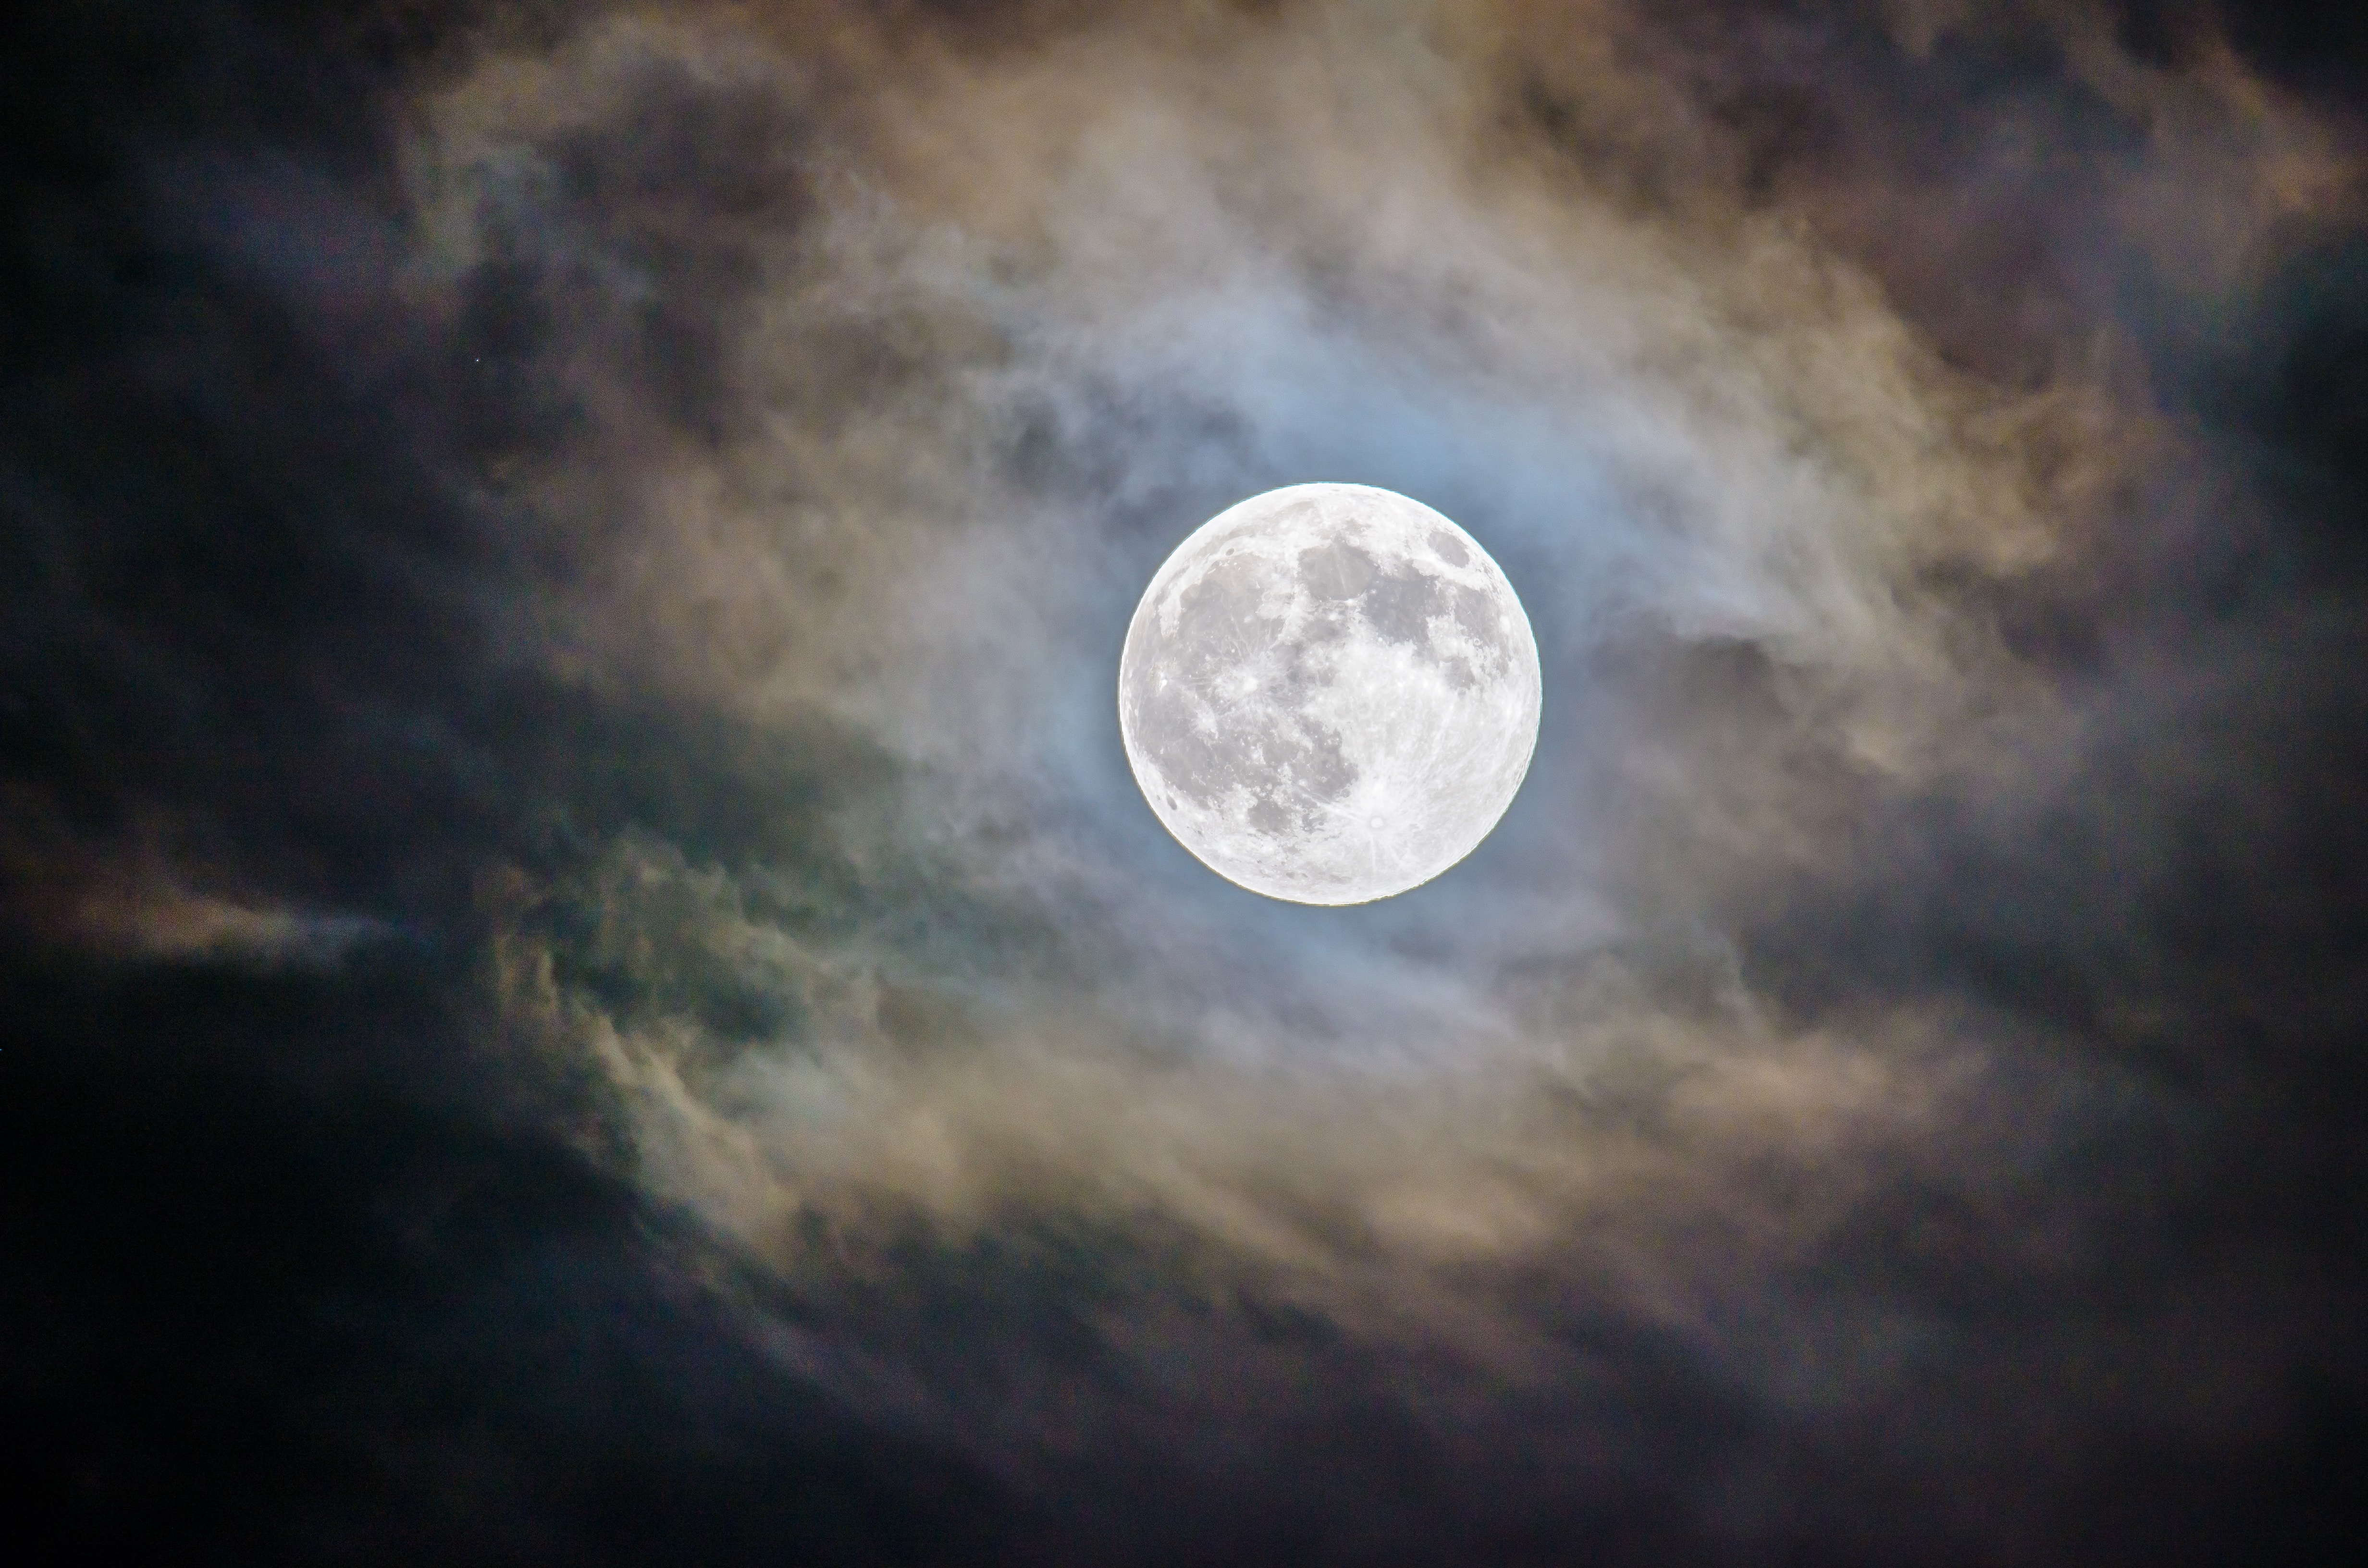 Full moon in a cloudy night sky.